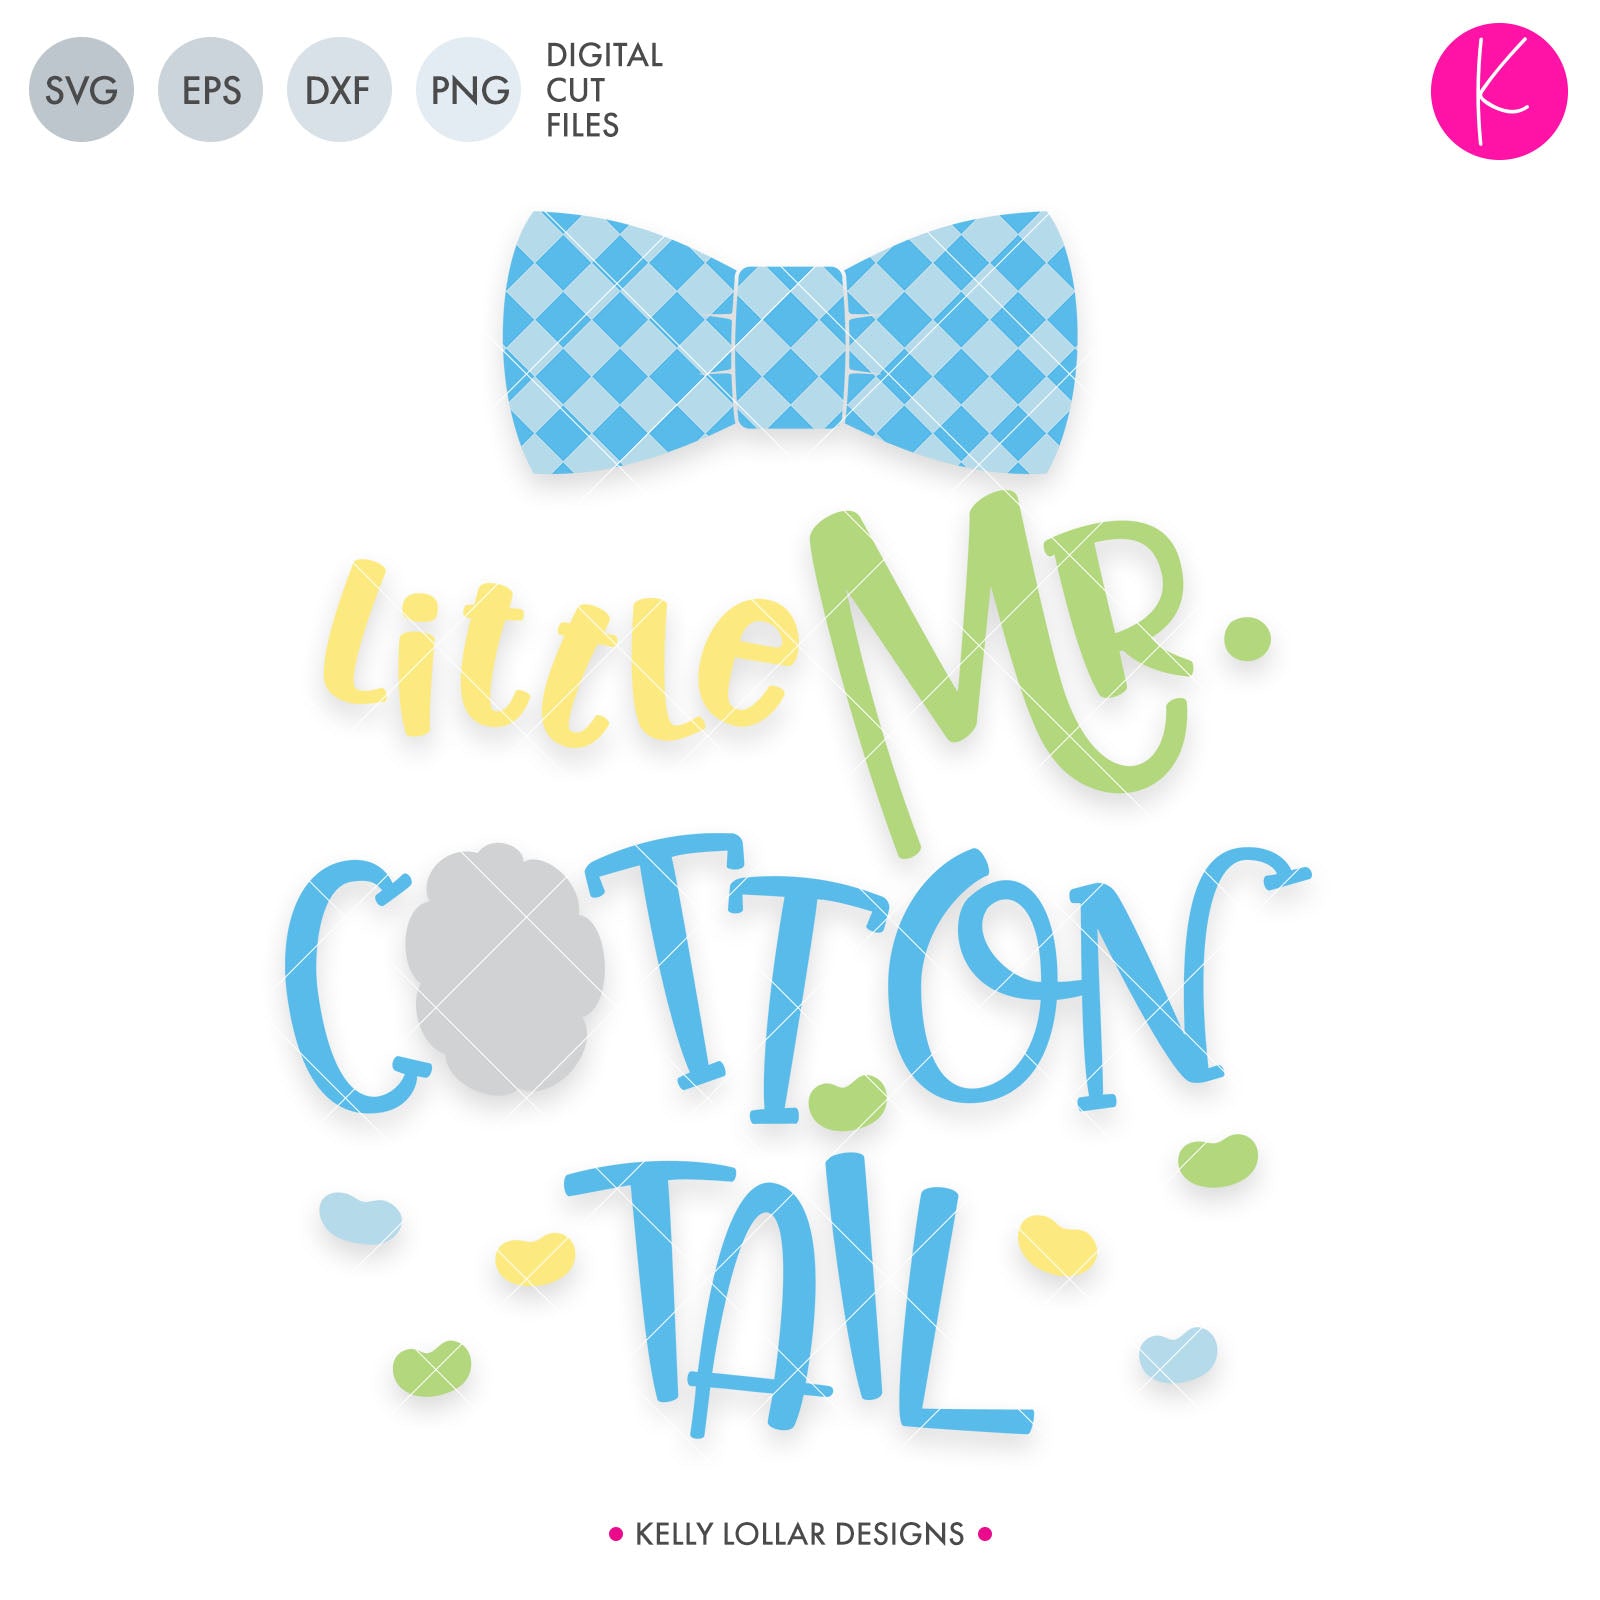 Little Mr. Cottontail | SVG DXF EPS PNG Cut Files